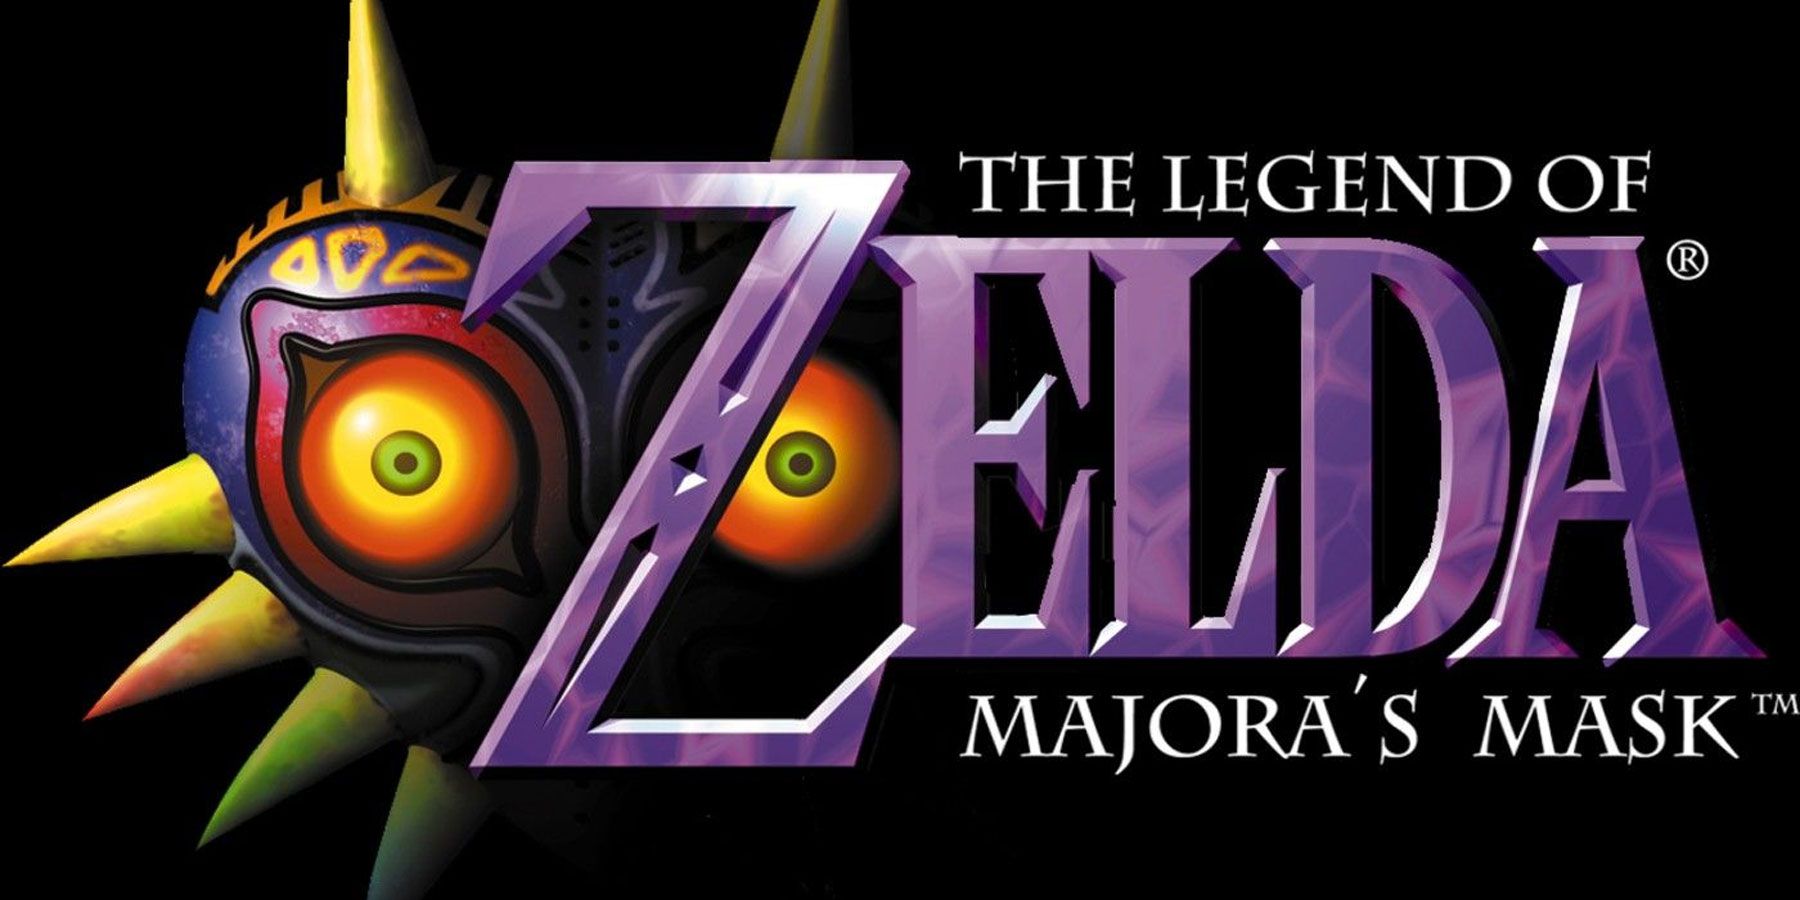 the-legend-of-zelda-majora's-mask-title-screen